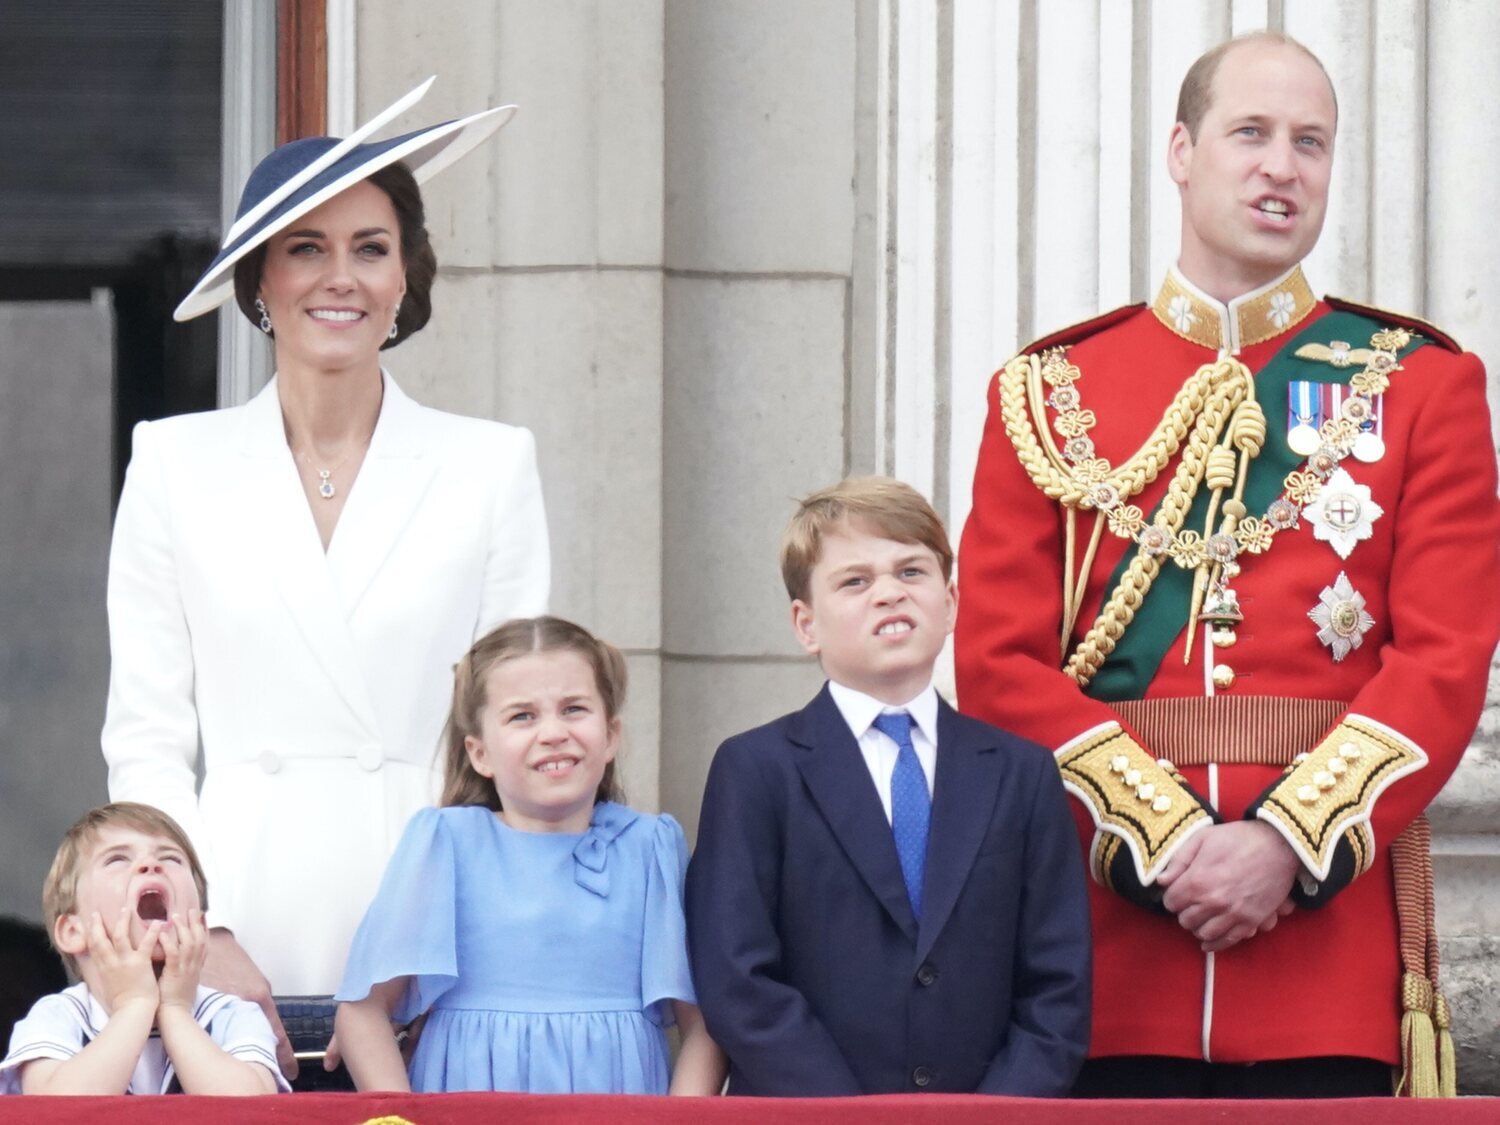 Buckingham busca un asistente de comunicación tras la crisis del caso Kate Middleton